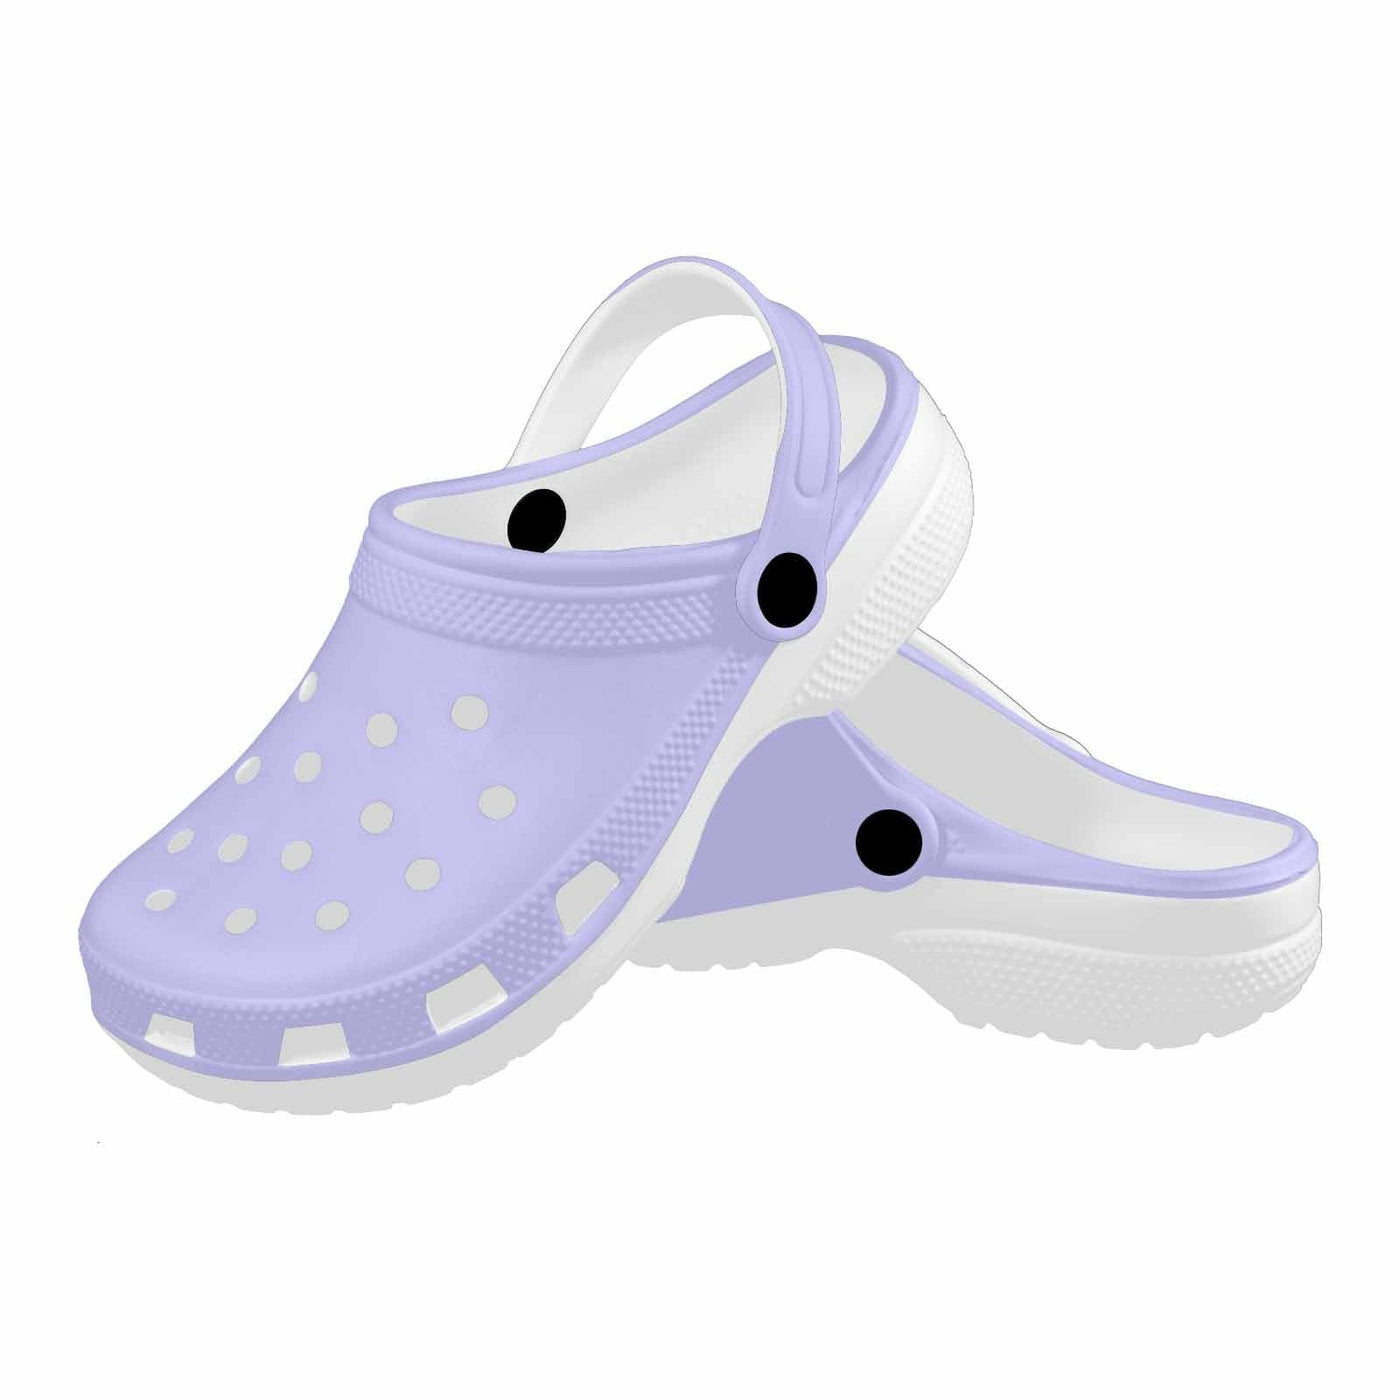 Periwinkle Purple Adult Clogs - Unisex | Clogs | Adults